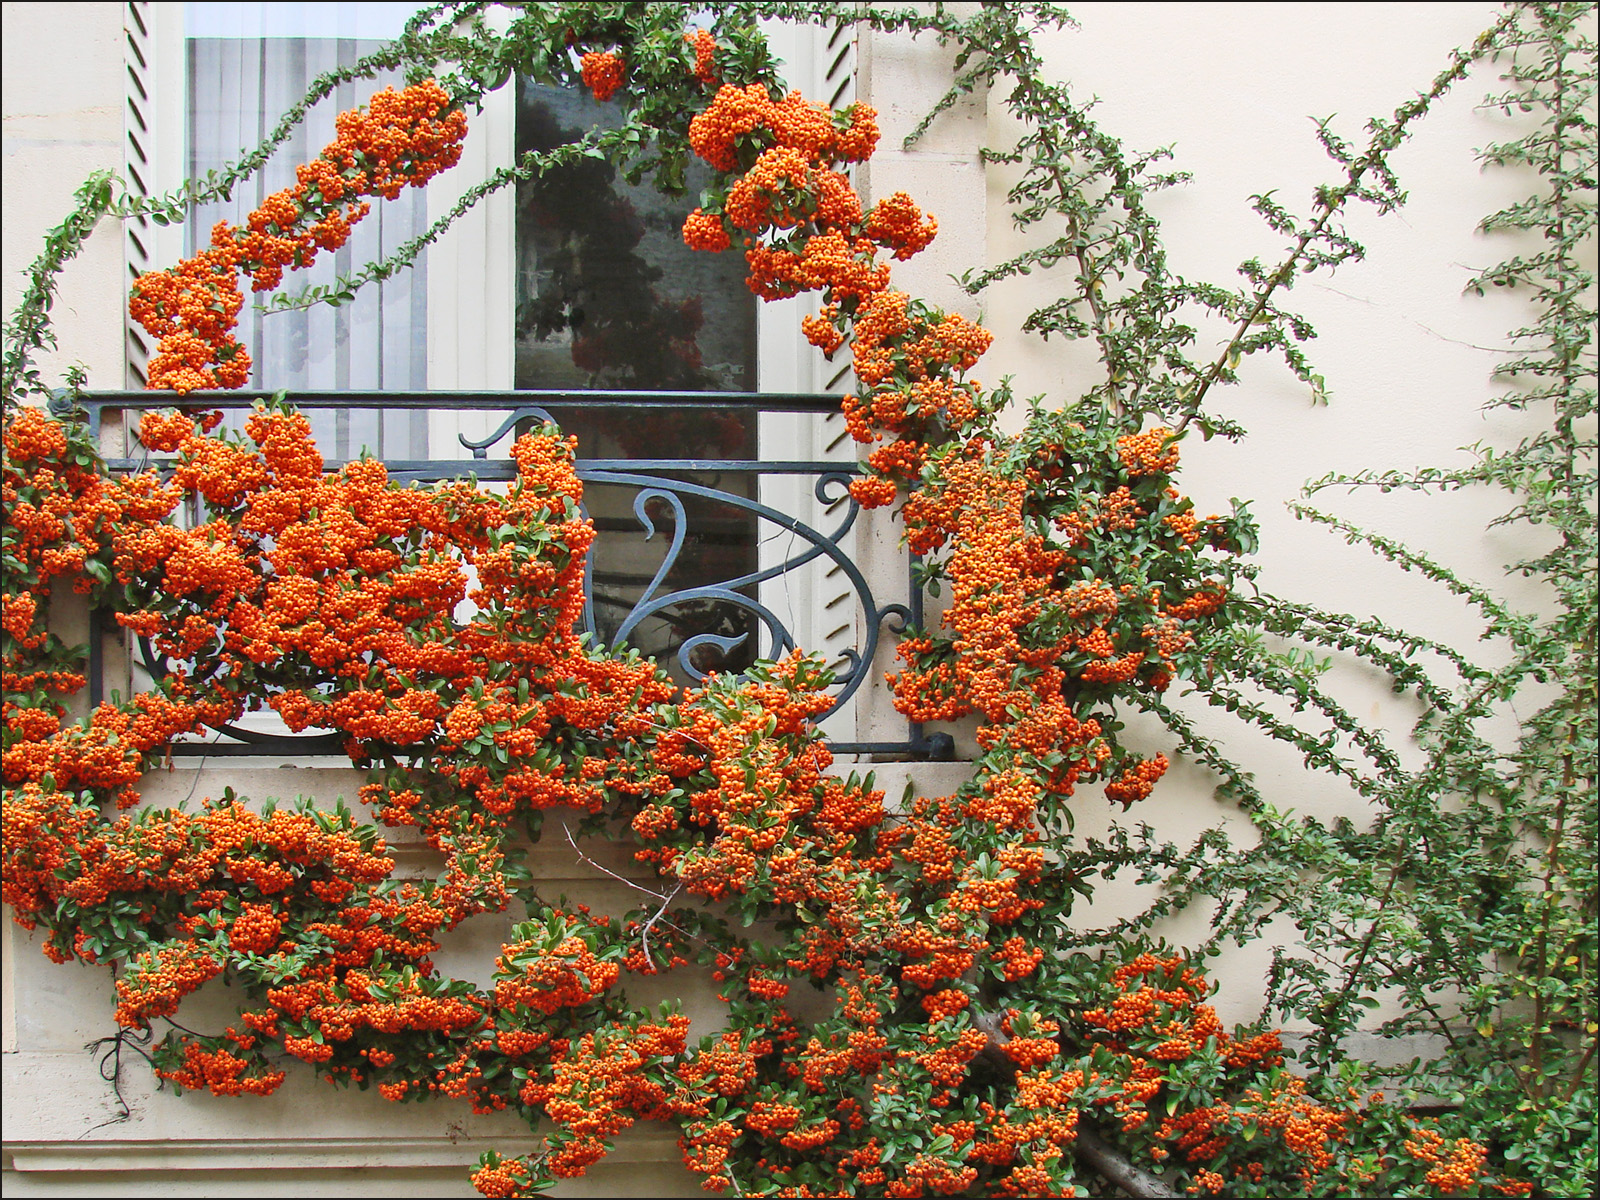 orange flowers growing over window with iron bars